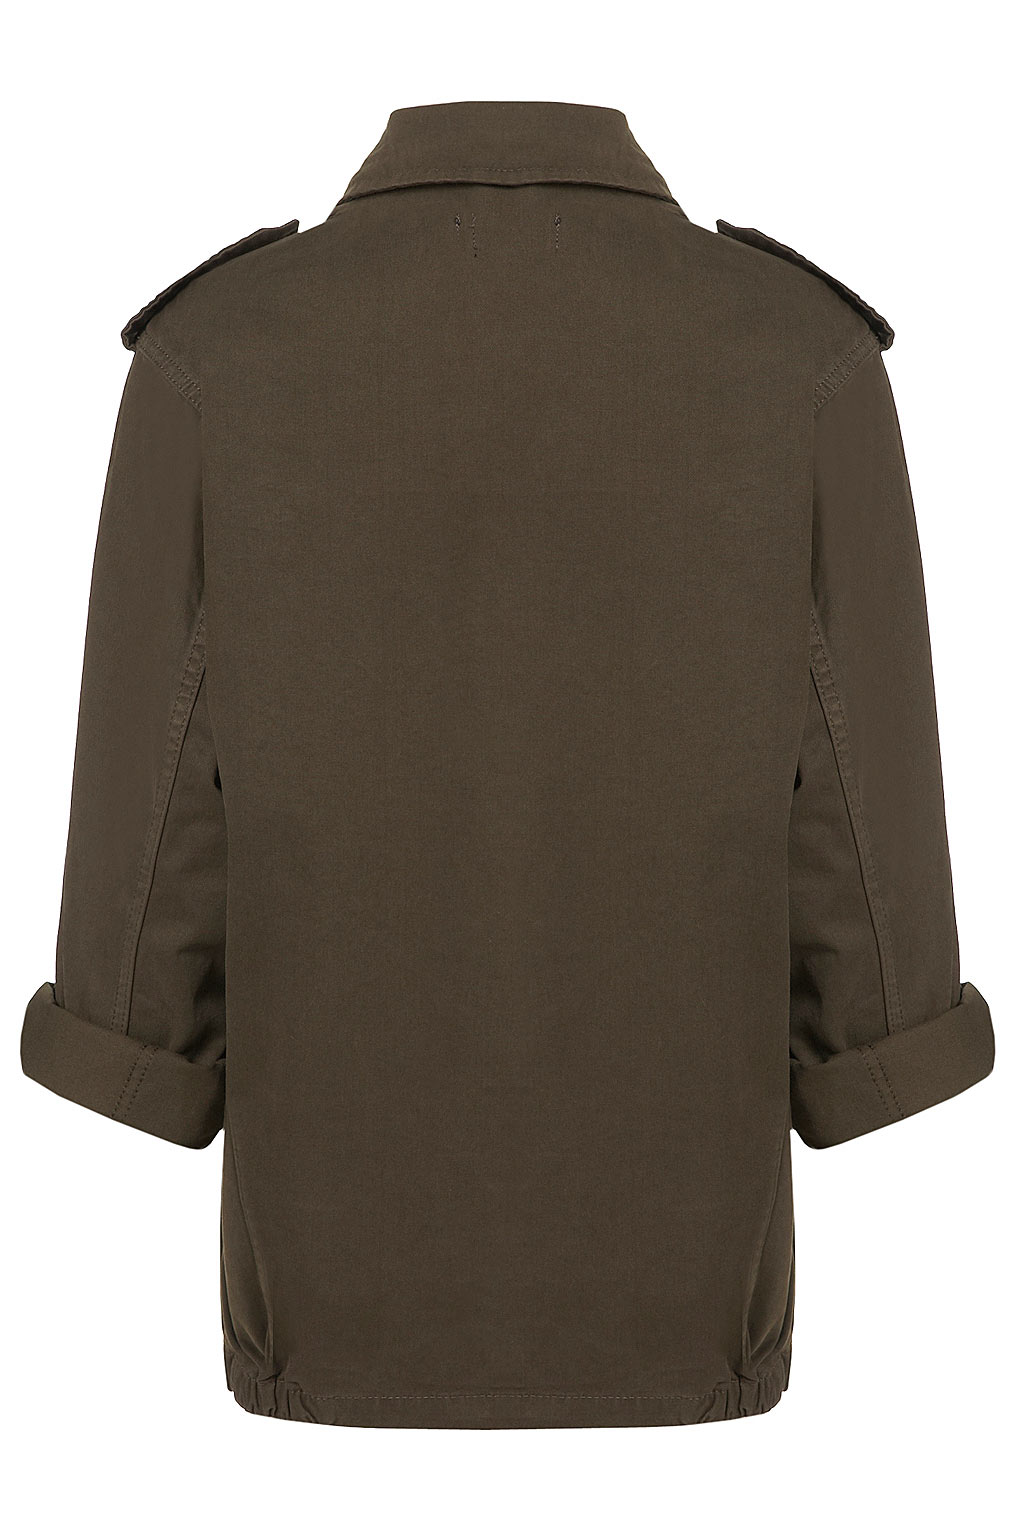 Lyst - Topshop Khaki Army Jacket in Brown